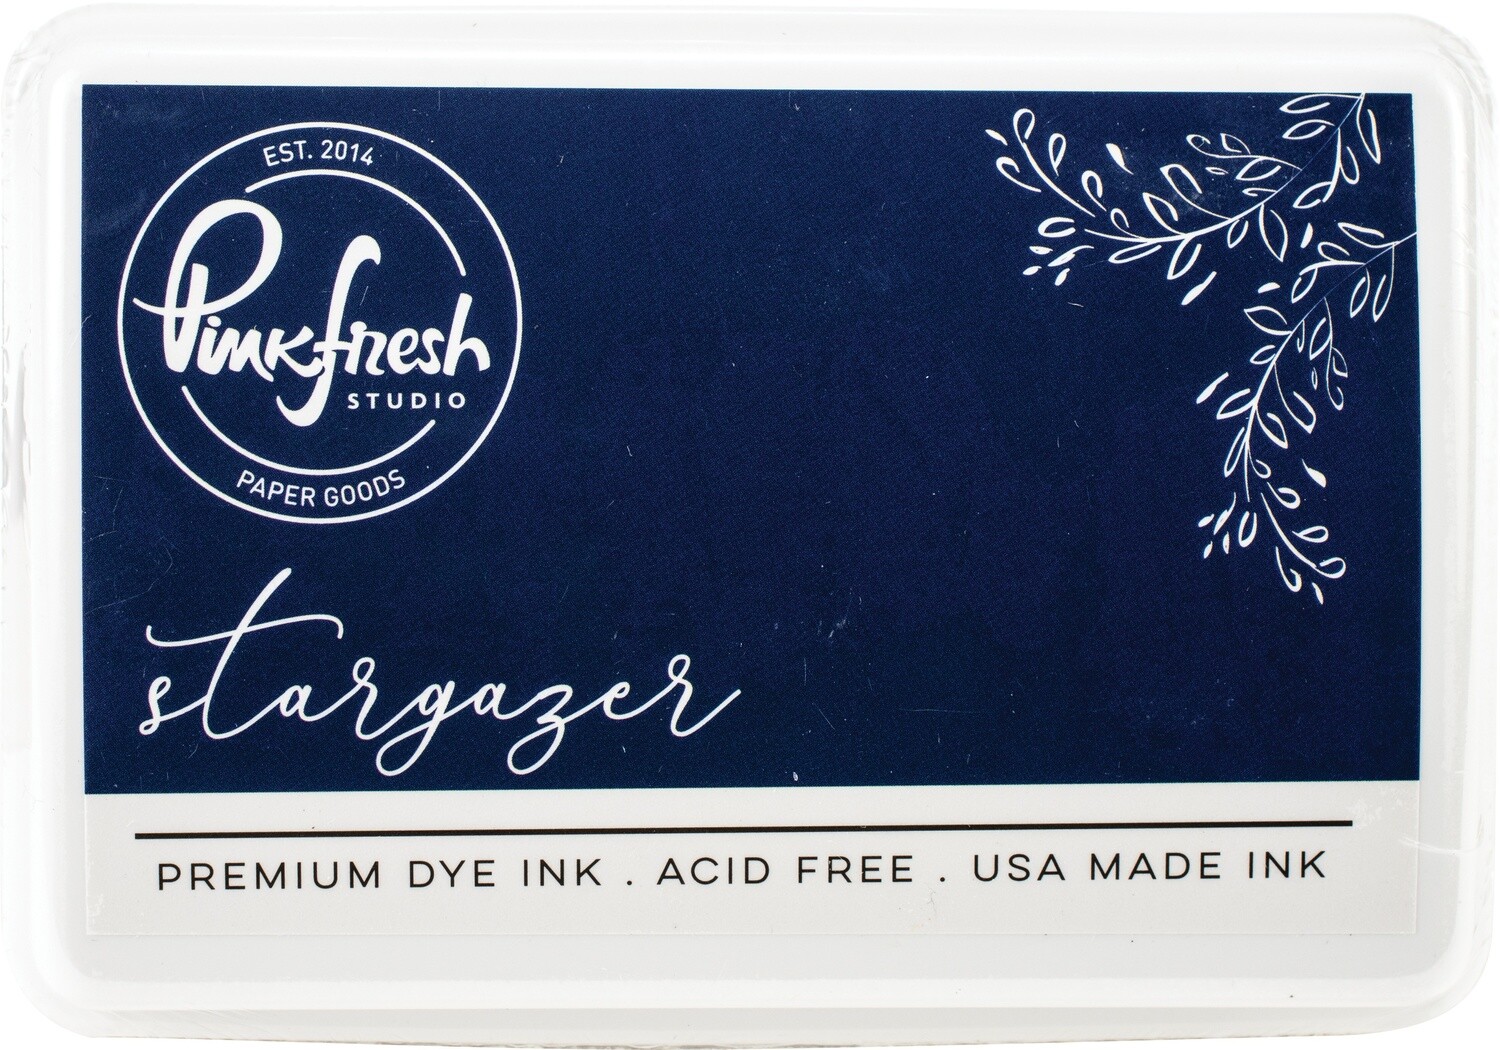 Pinkfresh Premium Dye Ink Pad - Stargazer